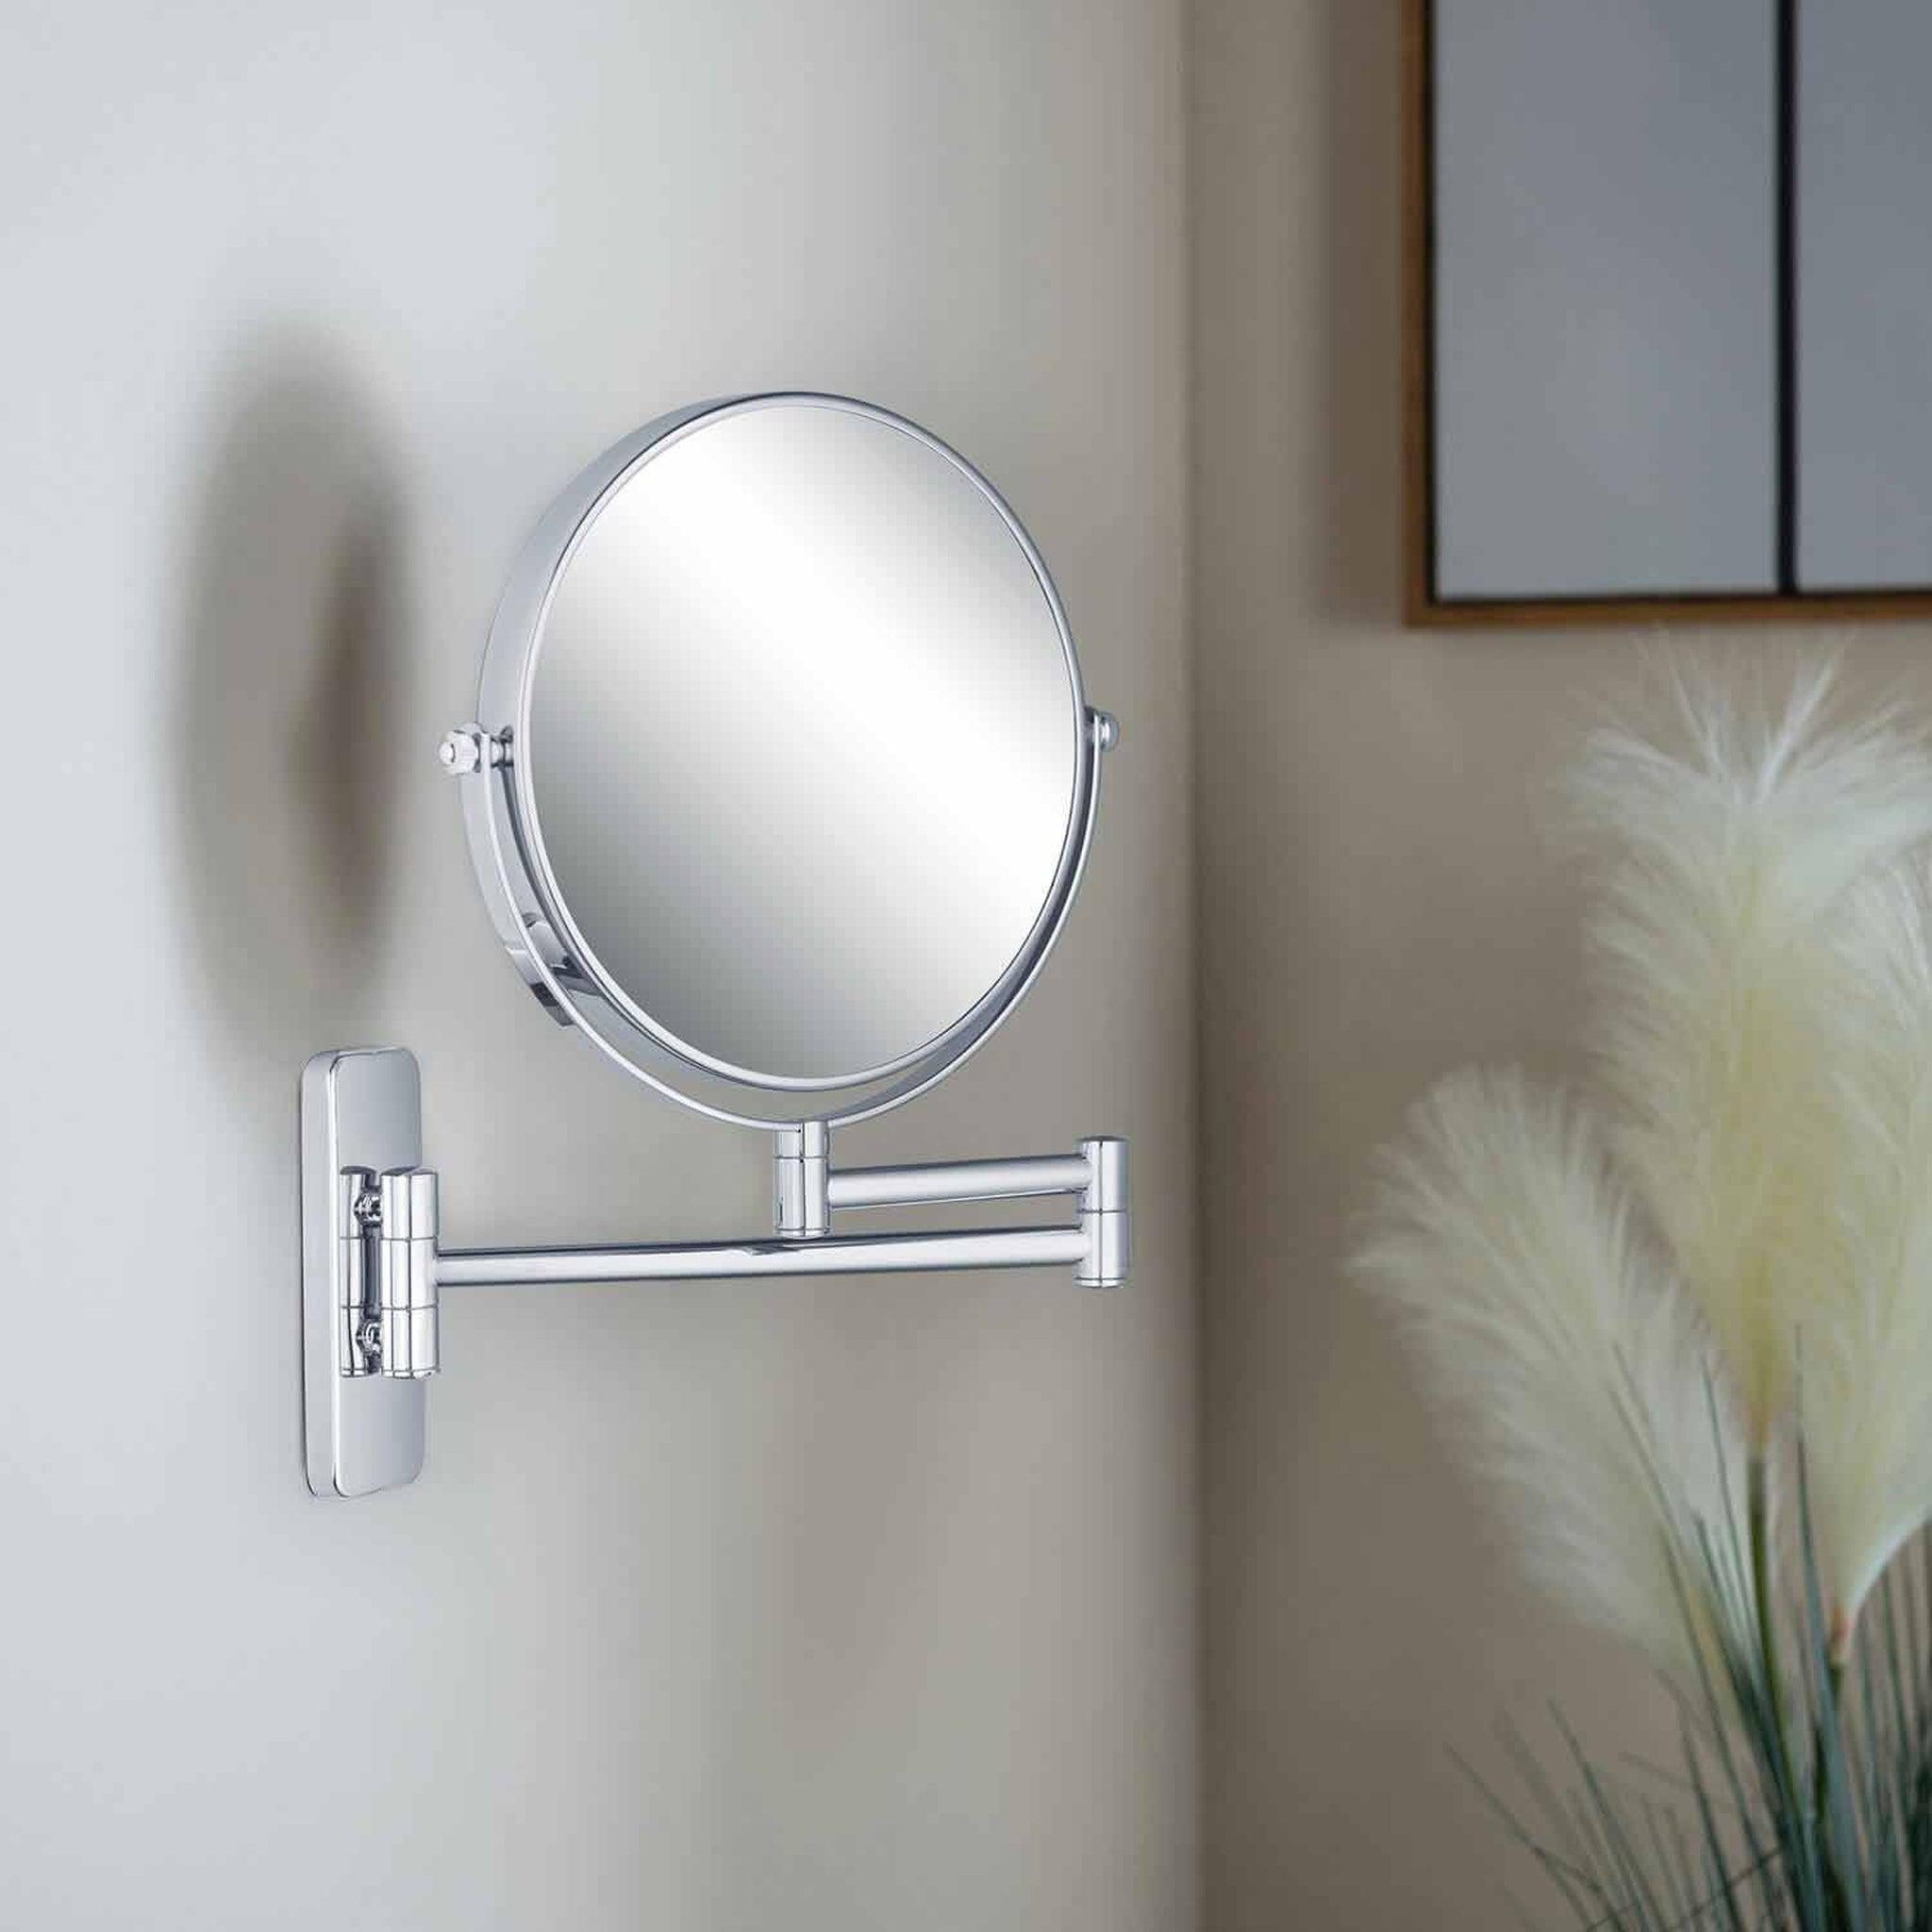 KIBI, KIBI Circular Brass Bathroom Magnifying Makeup Shaving Mirror in Chrome Frame Finish